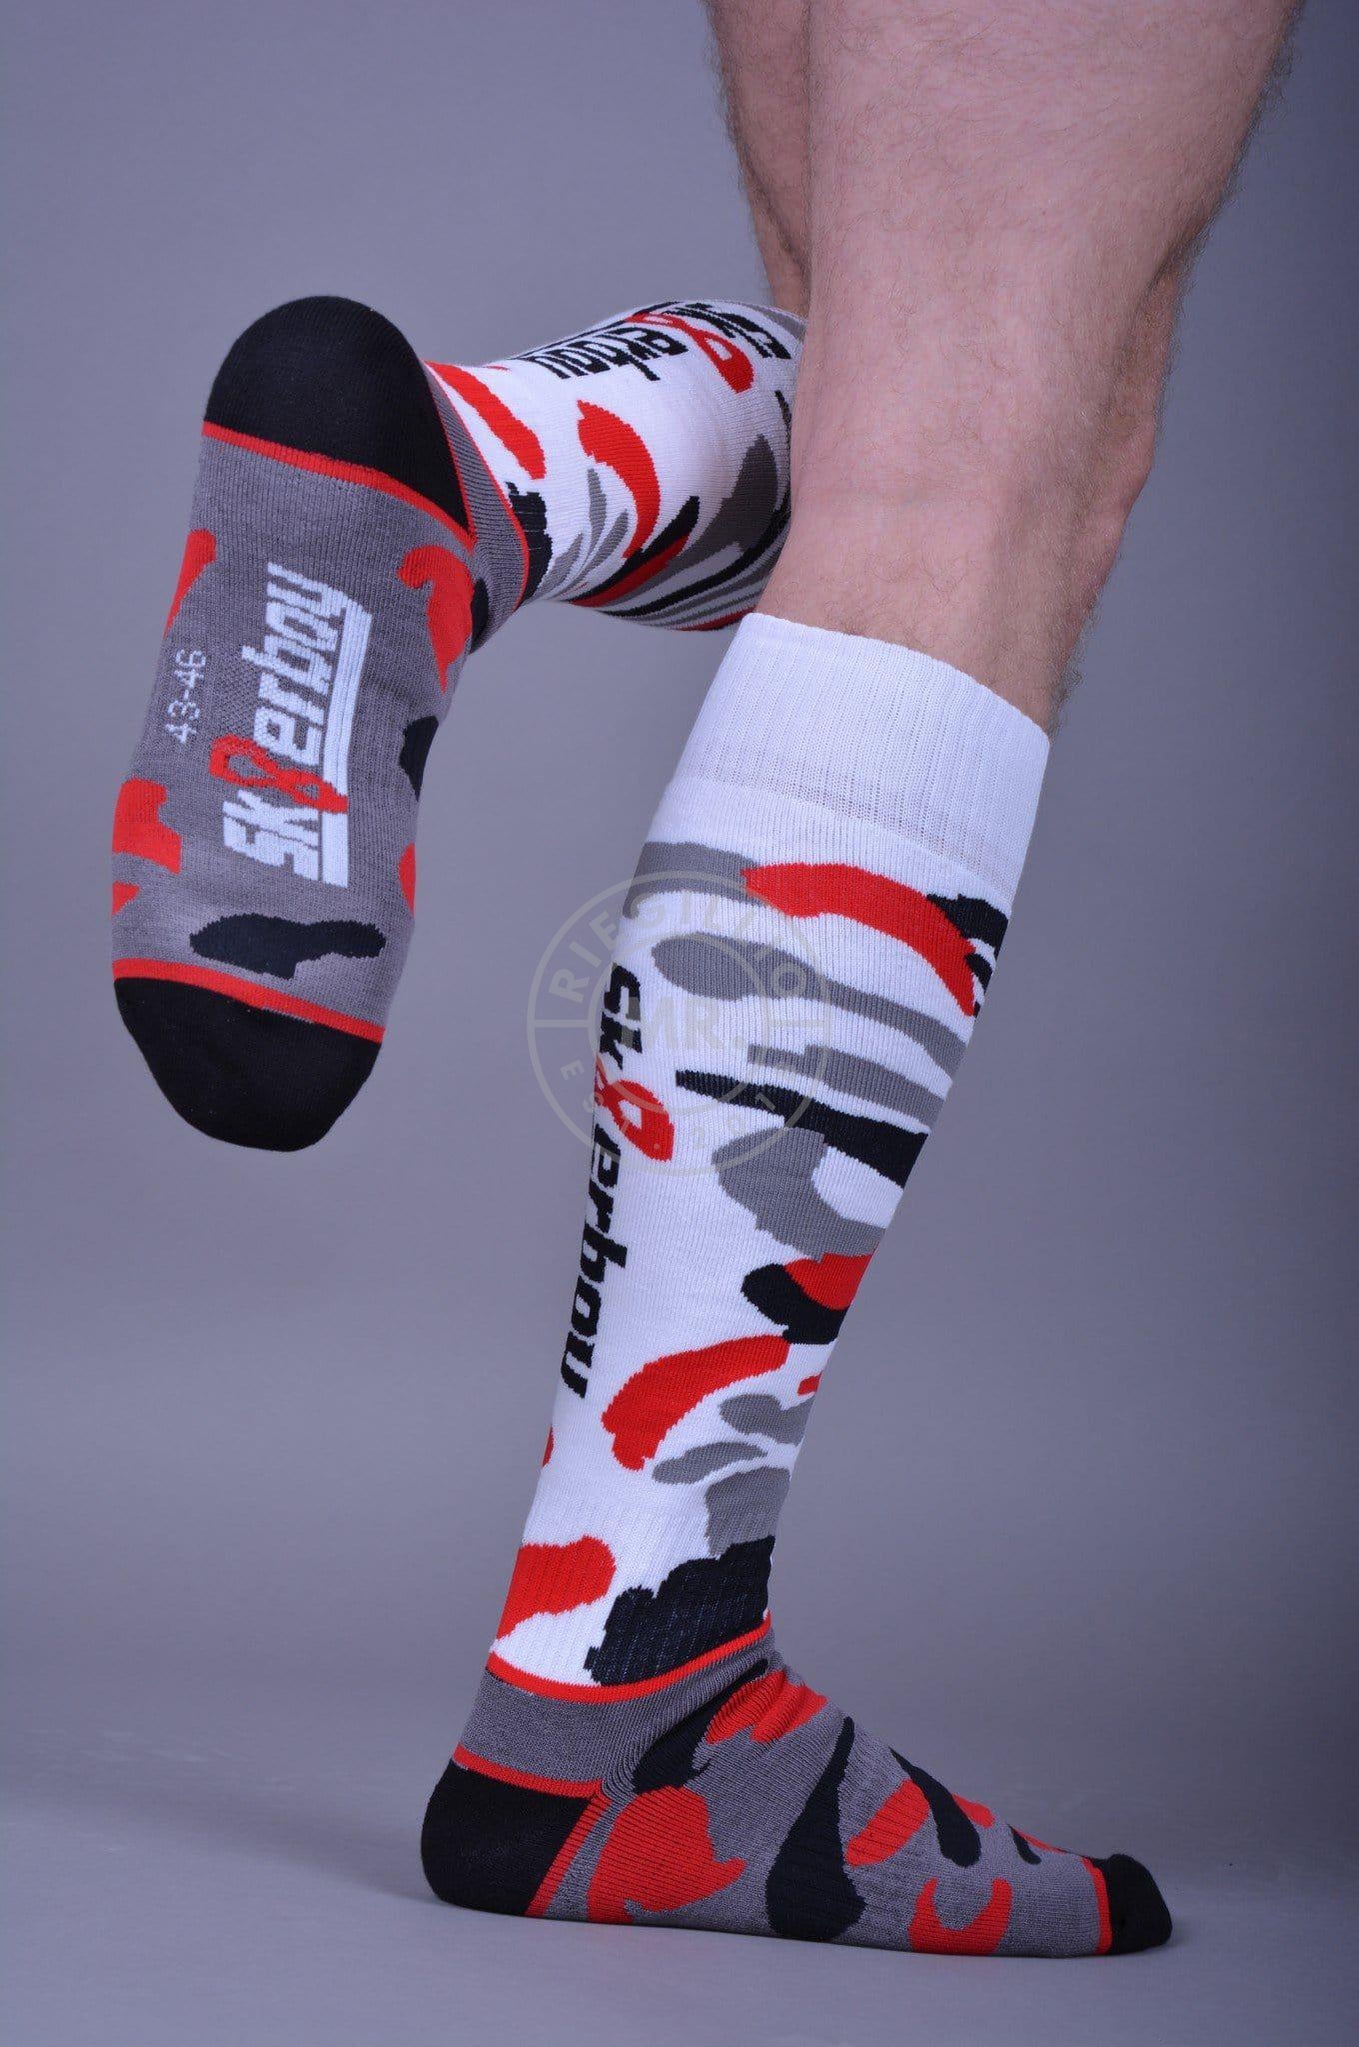 Sk8erboy MX Socks-at MR. Riegillio